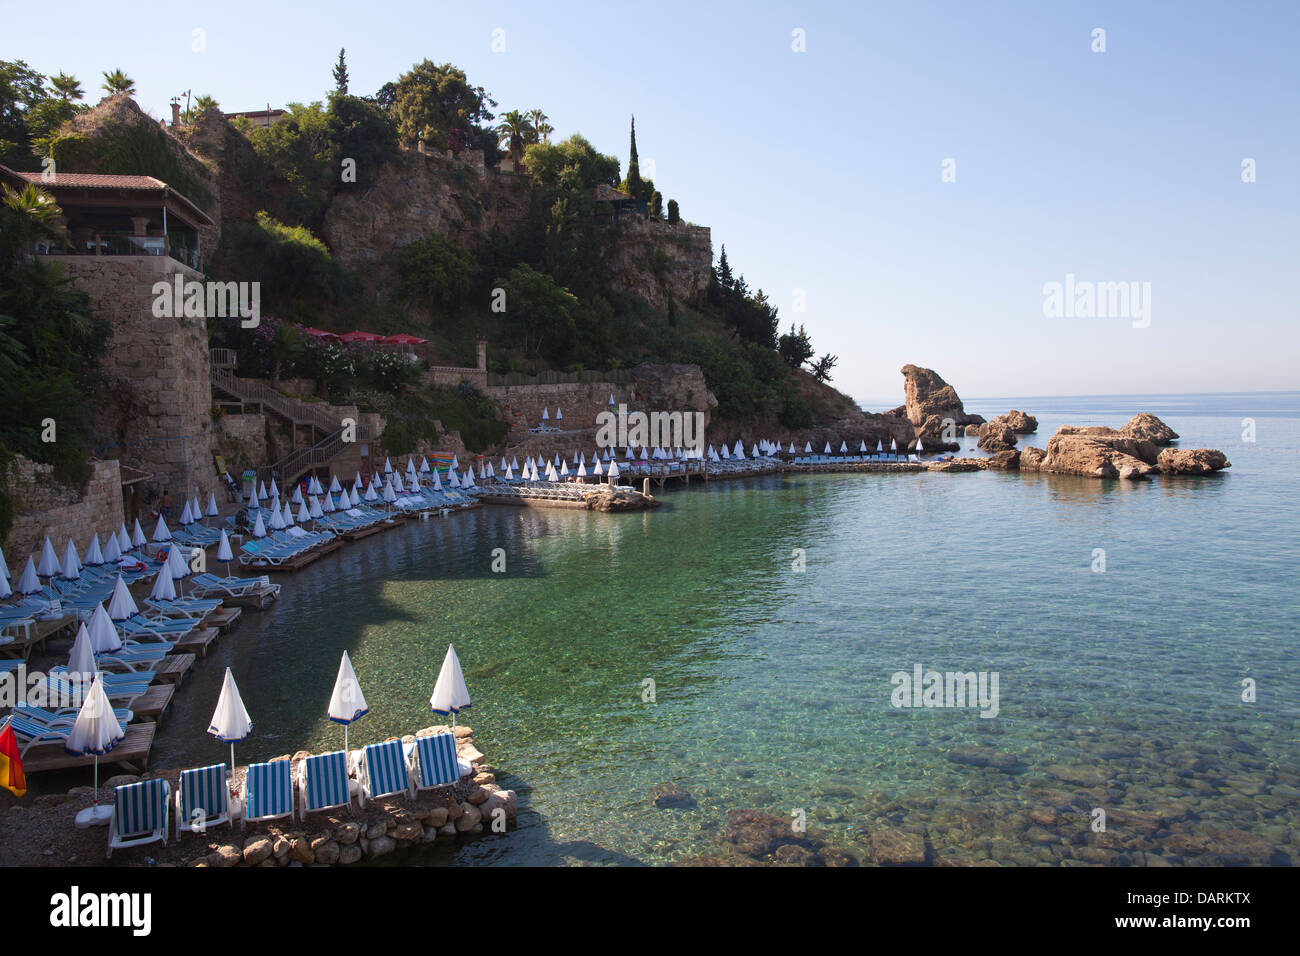 Mermerli Restaurant and beach, Antalya, Turkey Stock Photo